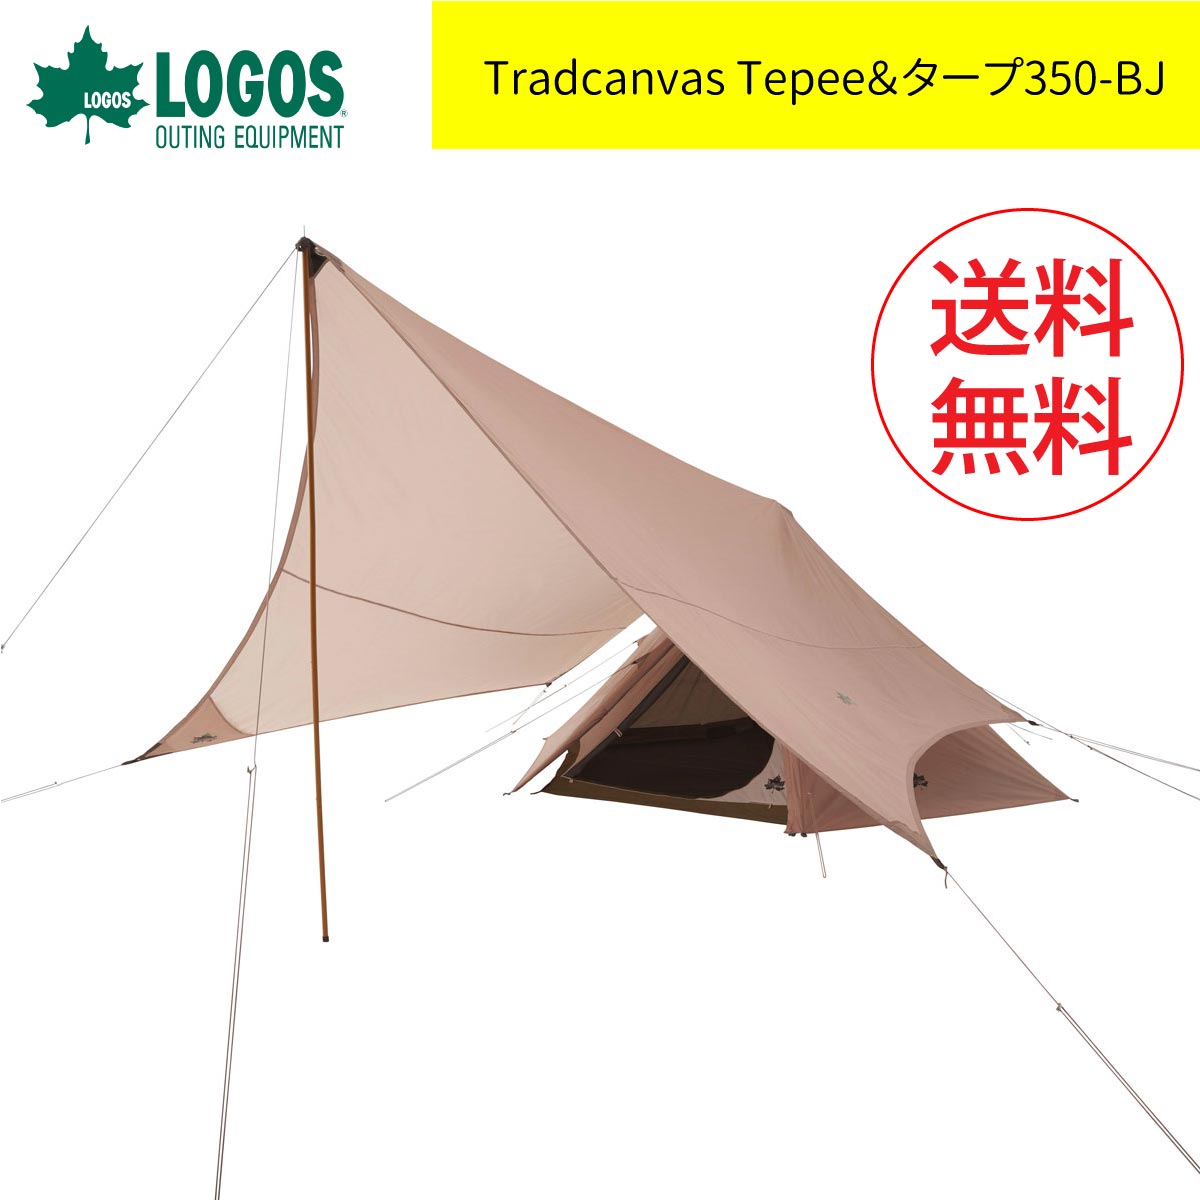 LOGOS ロゴス Tradcanvas Tepee＆タープ350-BJ ワンポールテントとタープのセット ティピーテント ファミリー キャンプ用品 アウトドア用品